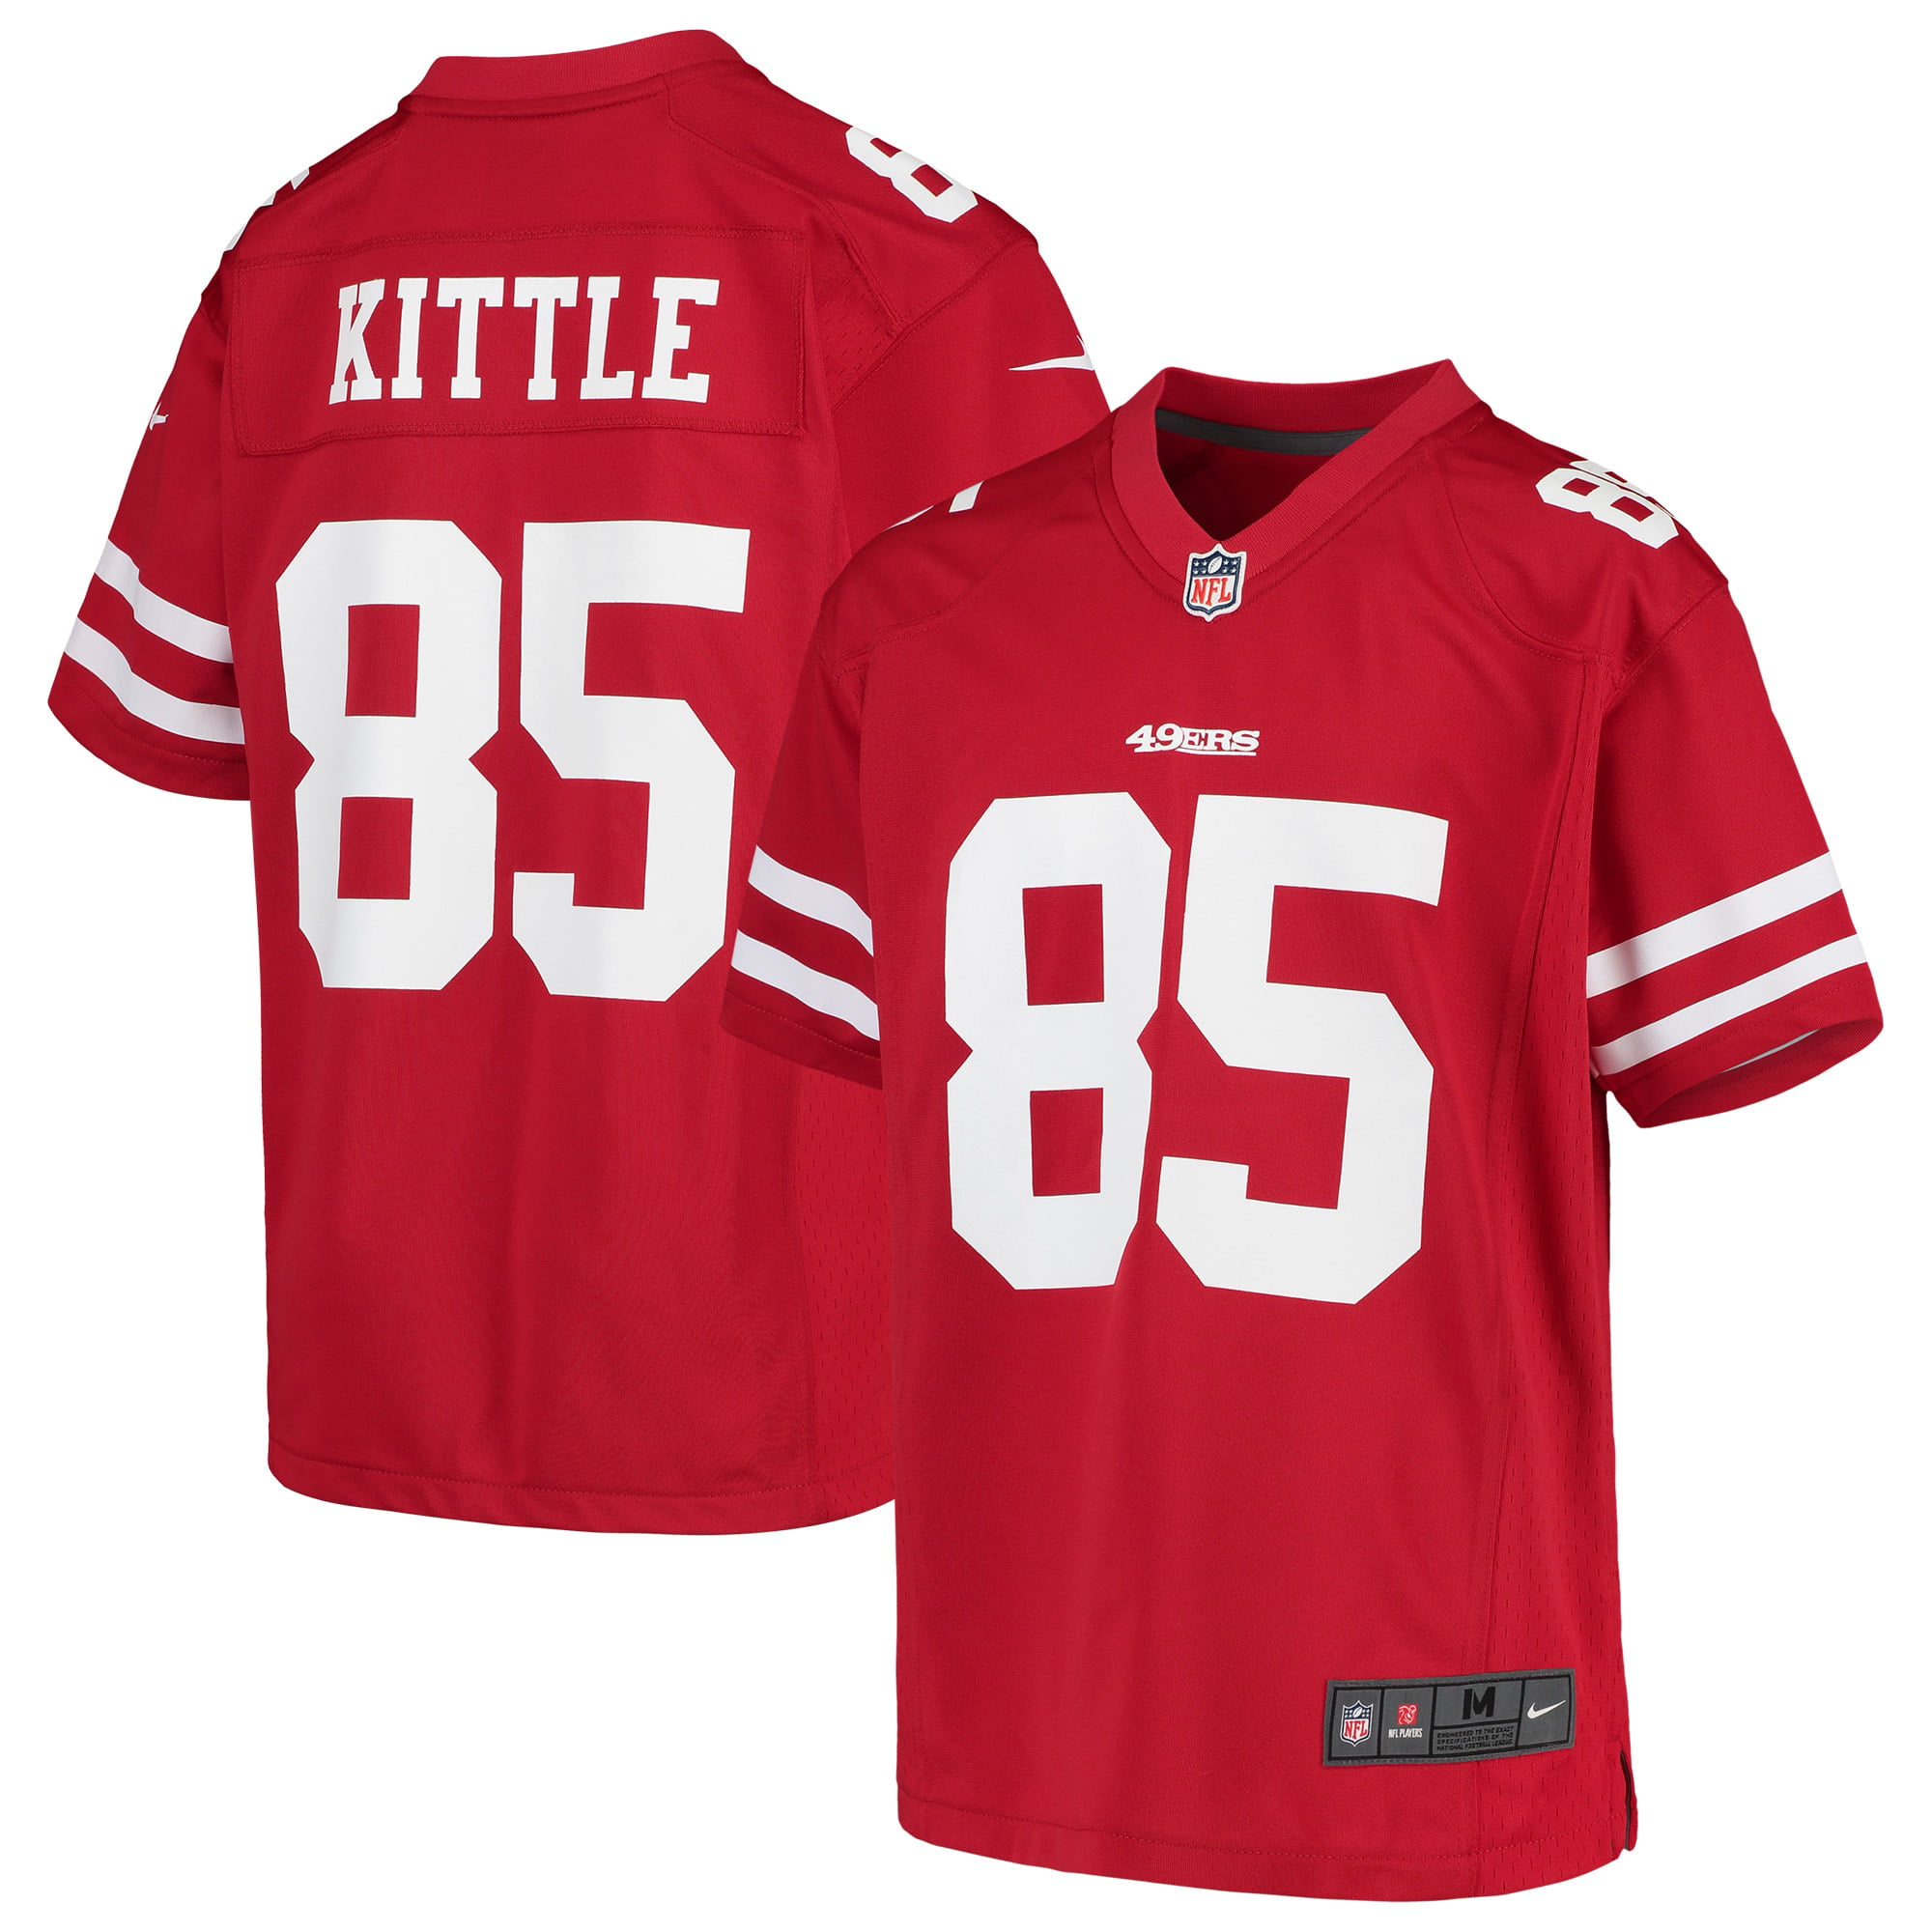 George Kittle San Francisco 49ers Nike Youth Game Jersey - Scarlet - Walmart.com ...